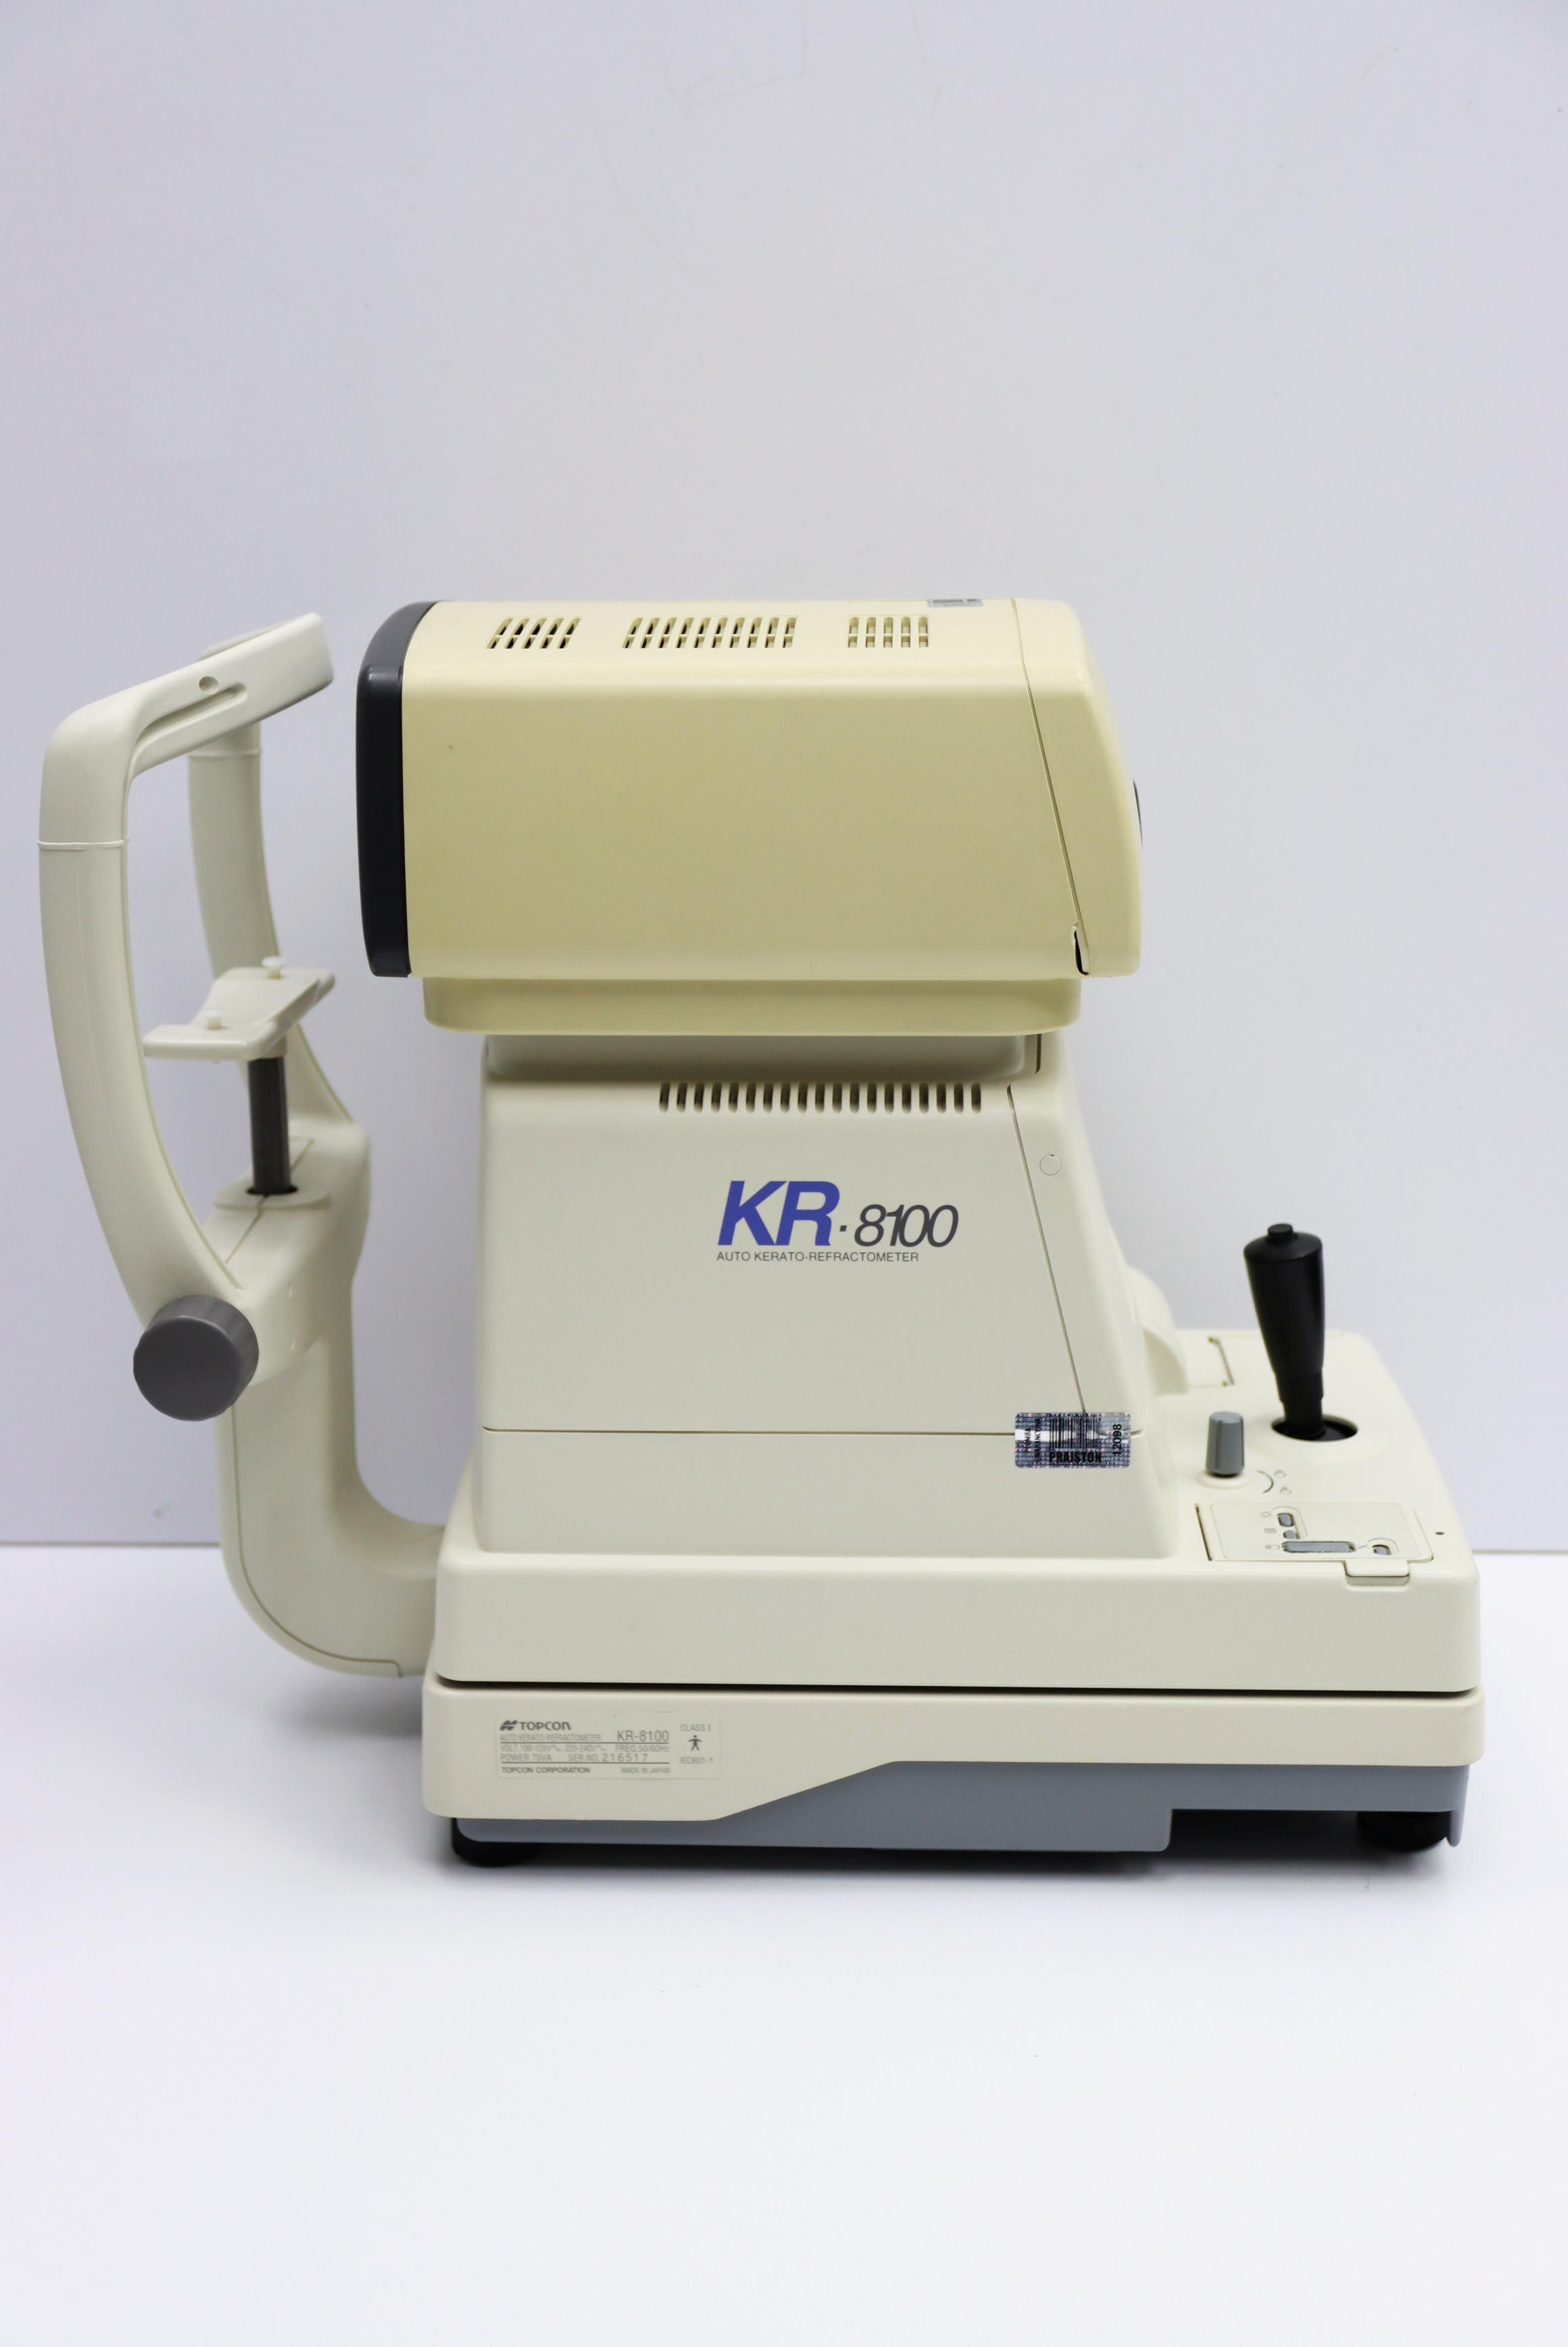 Autorefraktometry (autokeratorefraktometry) używane Topcon KR-8100 - Praiston rekondycjonowany